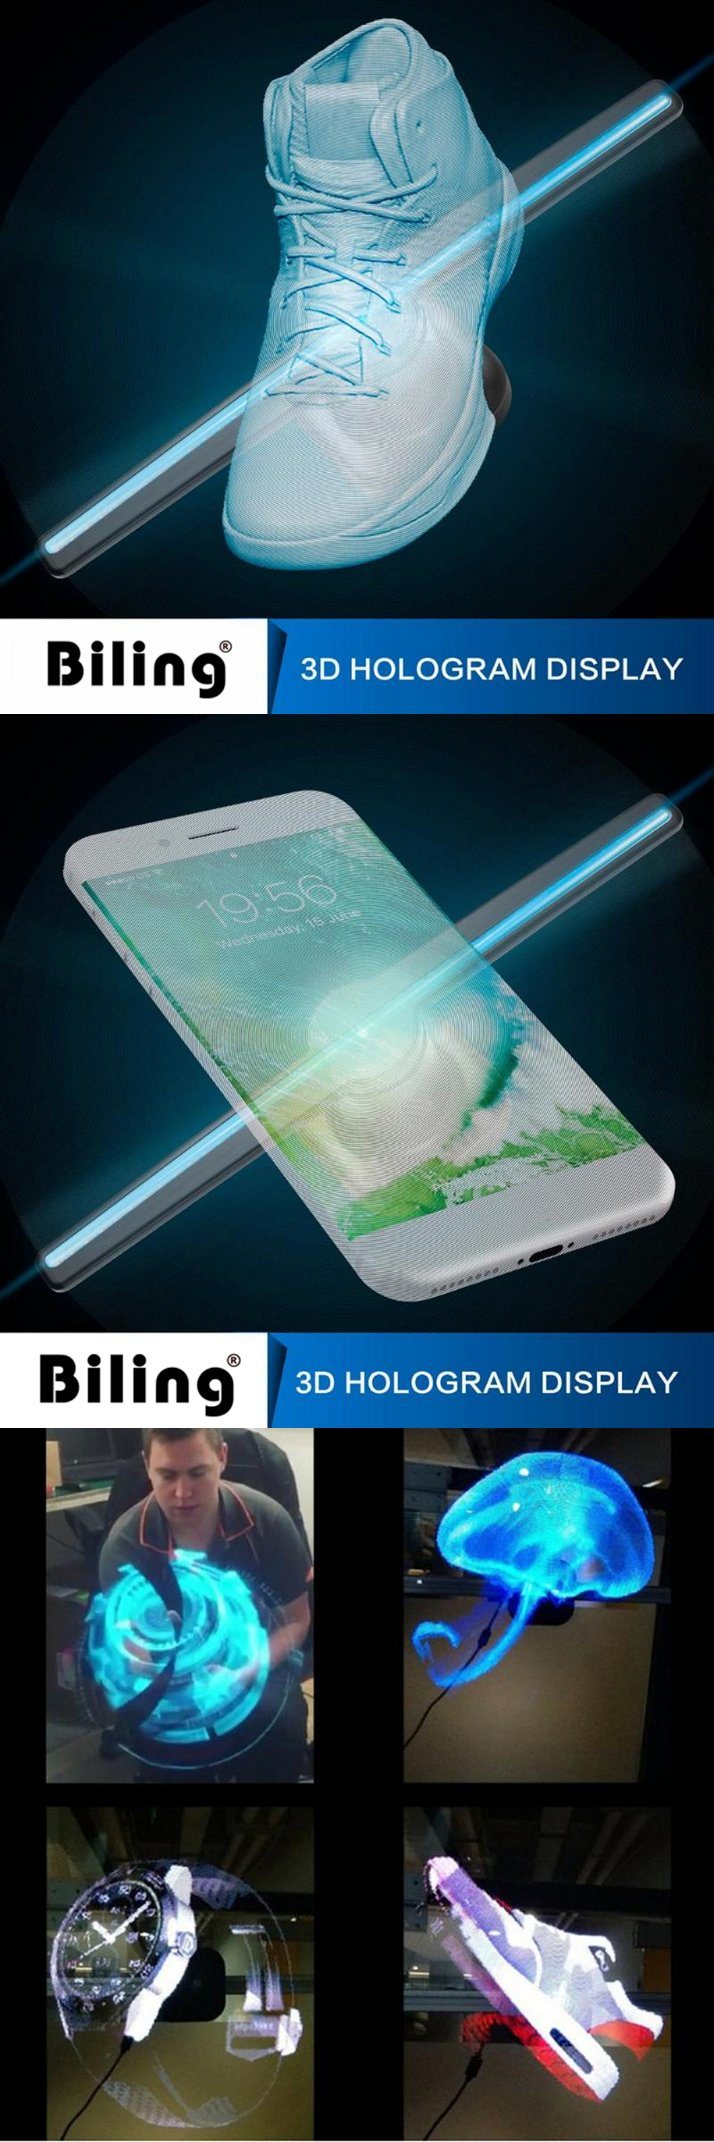 Hot Popular Advertising Equipment Hologram 3D LED Fan Display in Air, 3D Hologram 50 Cm LED Fan